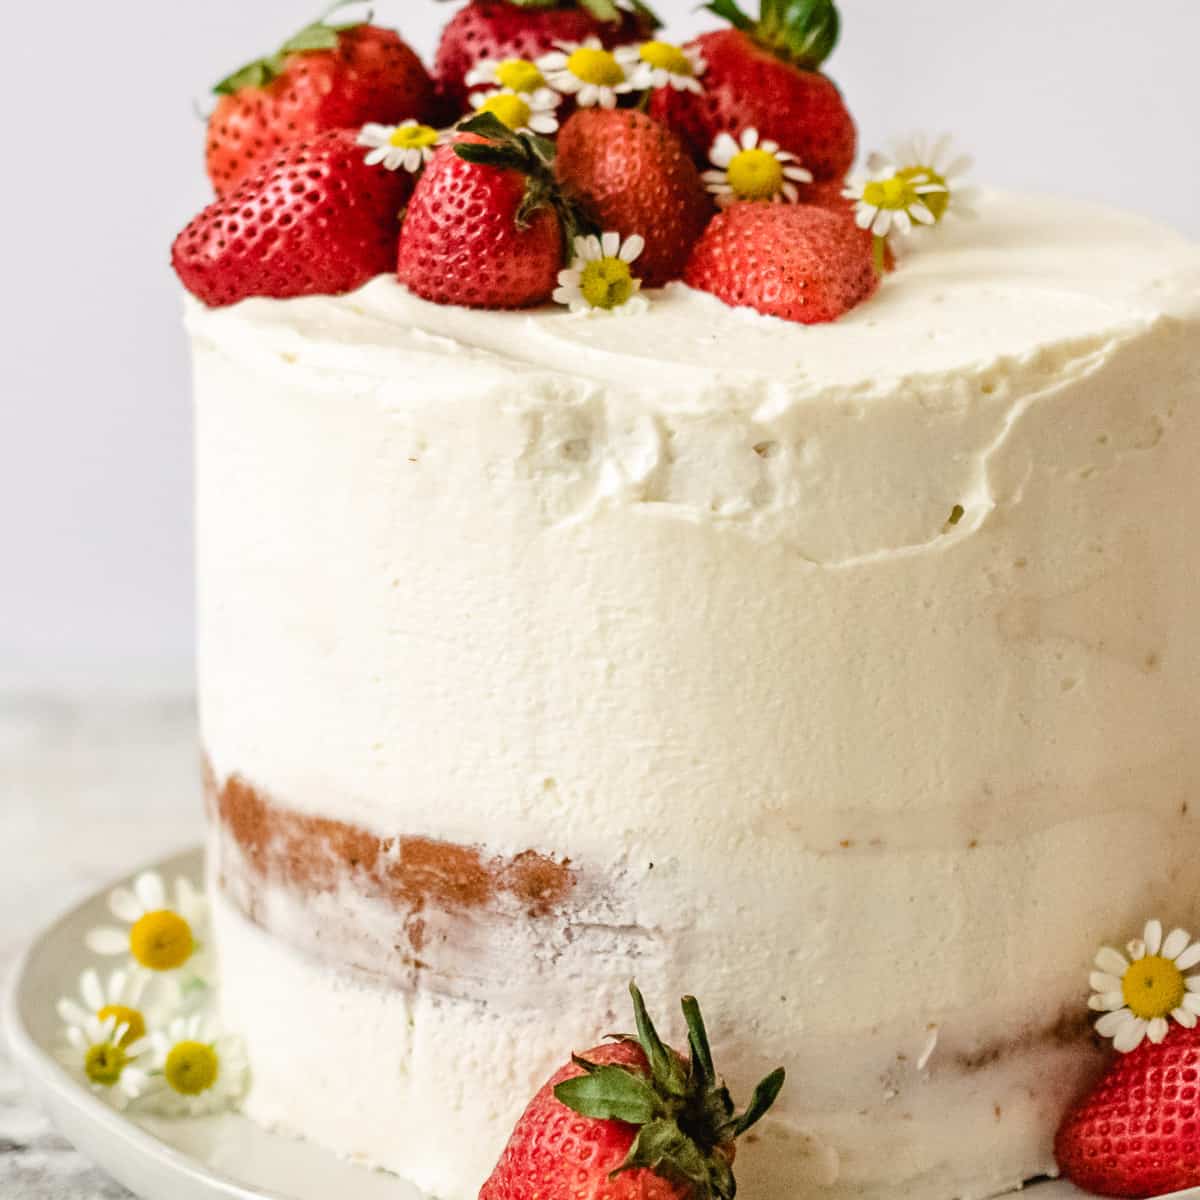 Chocolate-Strawberry Celebration Cake Recipe: How to Make It